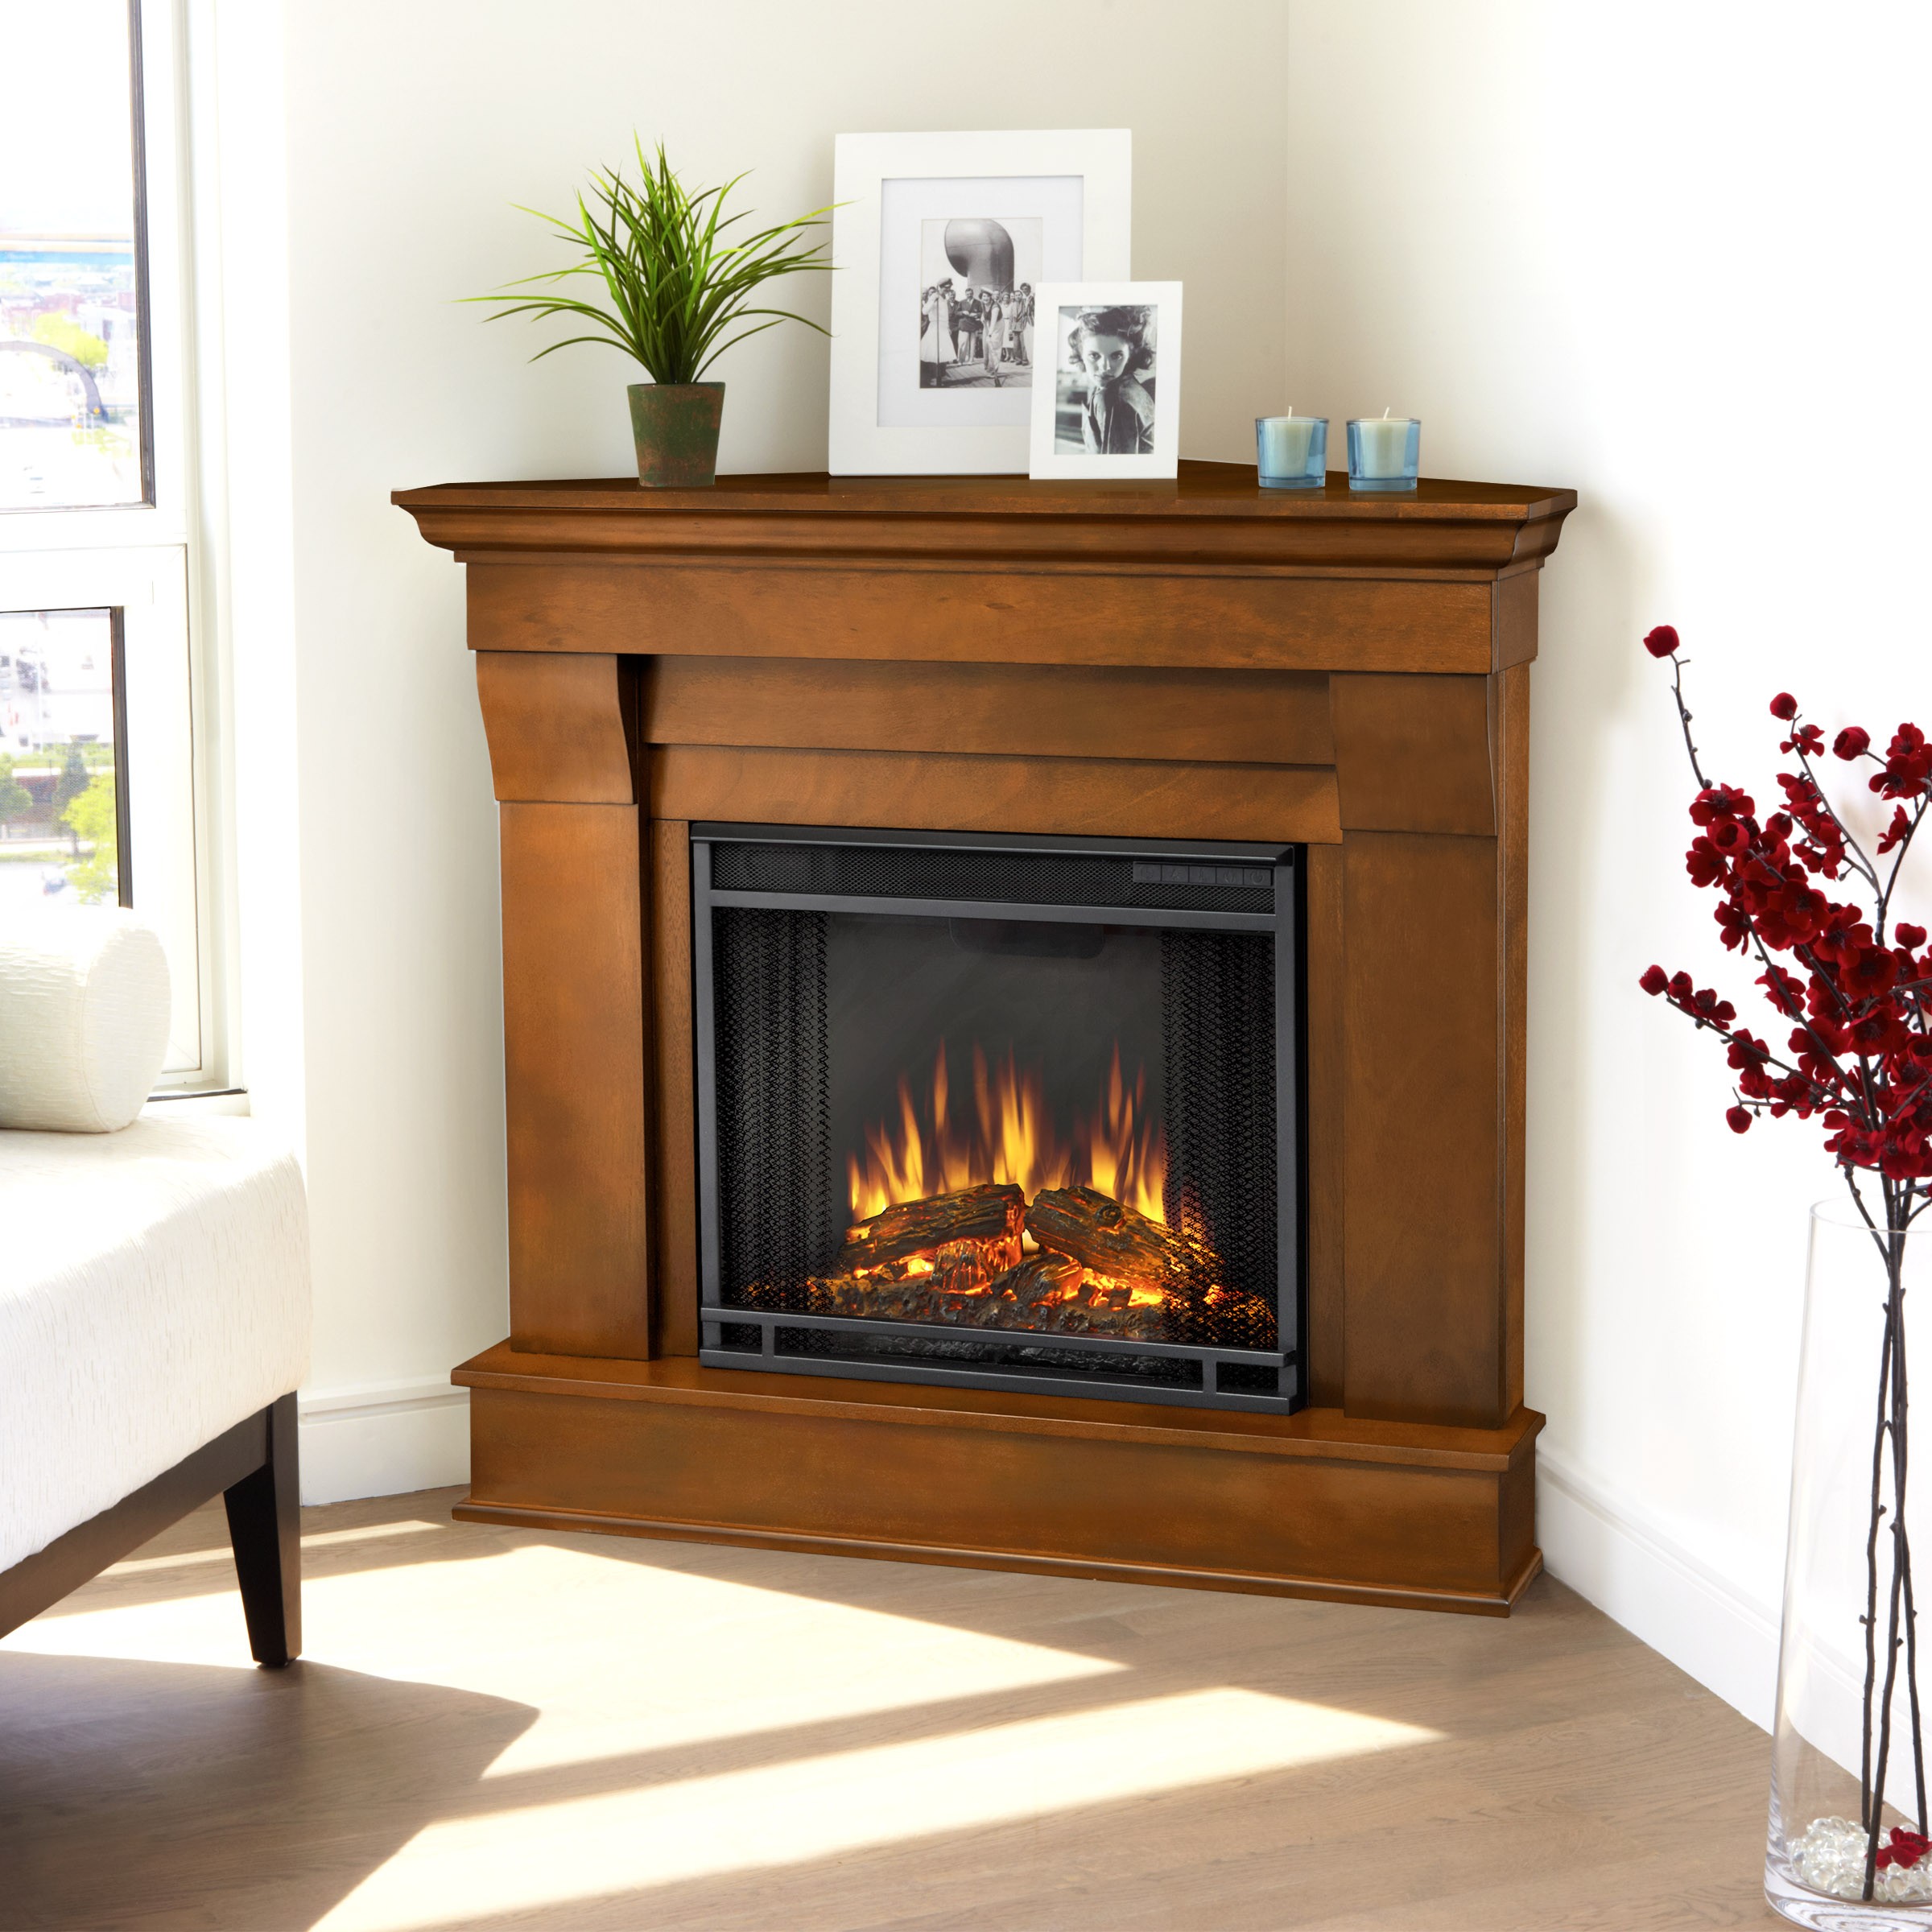 Menards Fireplace Mantel Best Of Menards Electric Fireplace Charming Fireplace